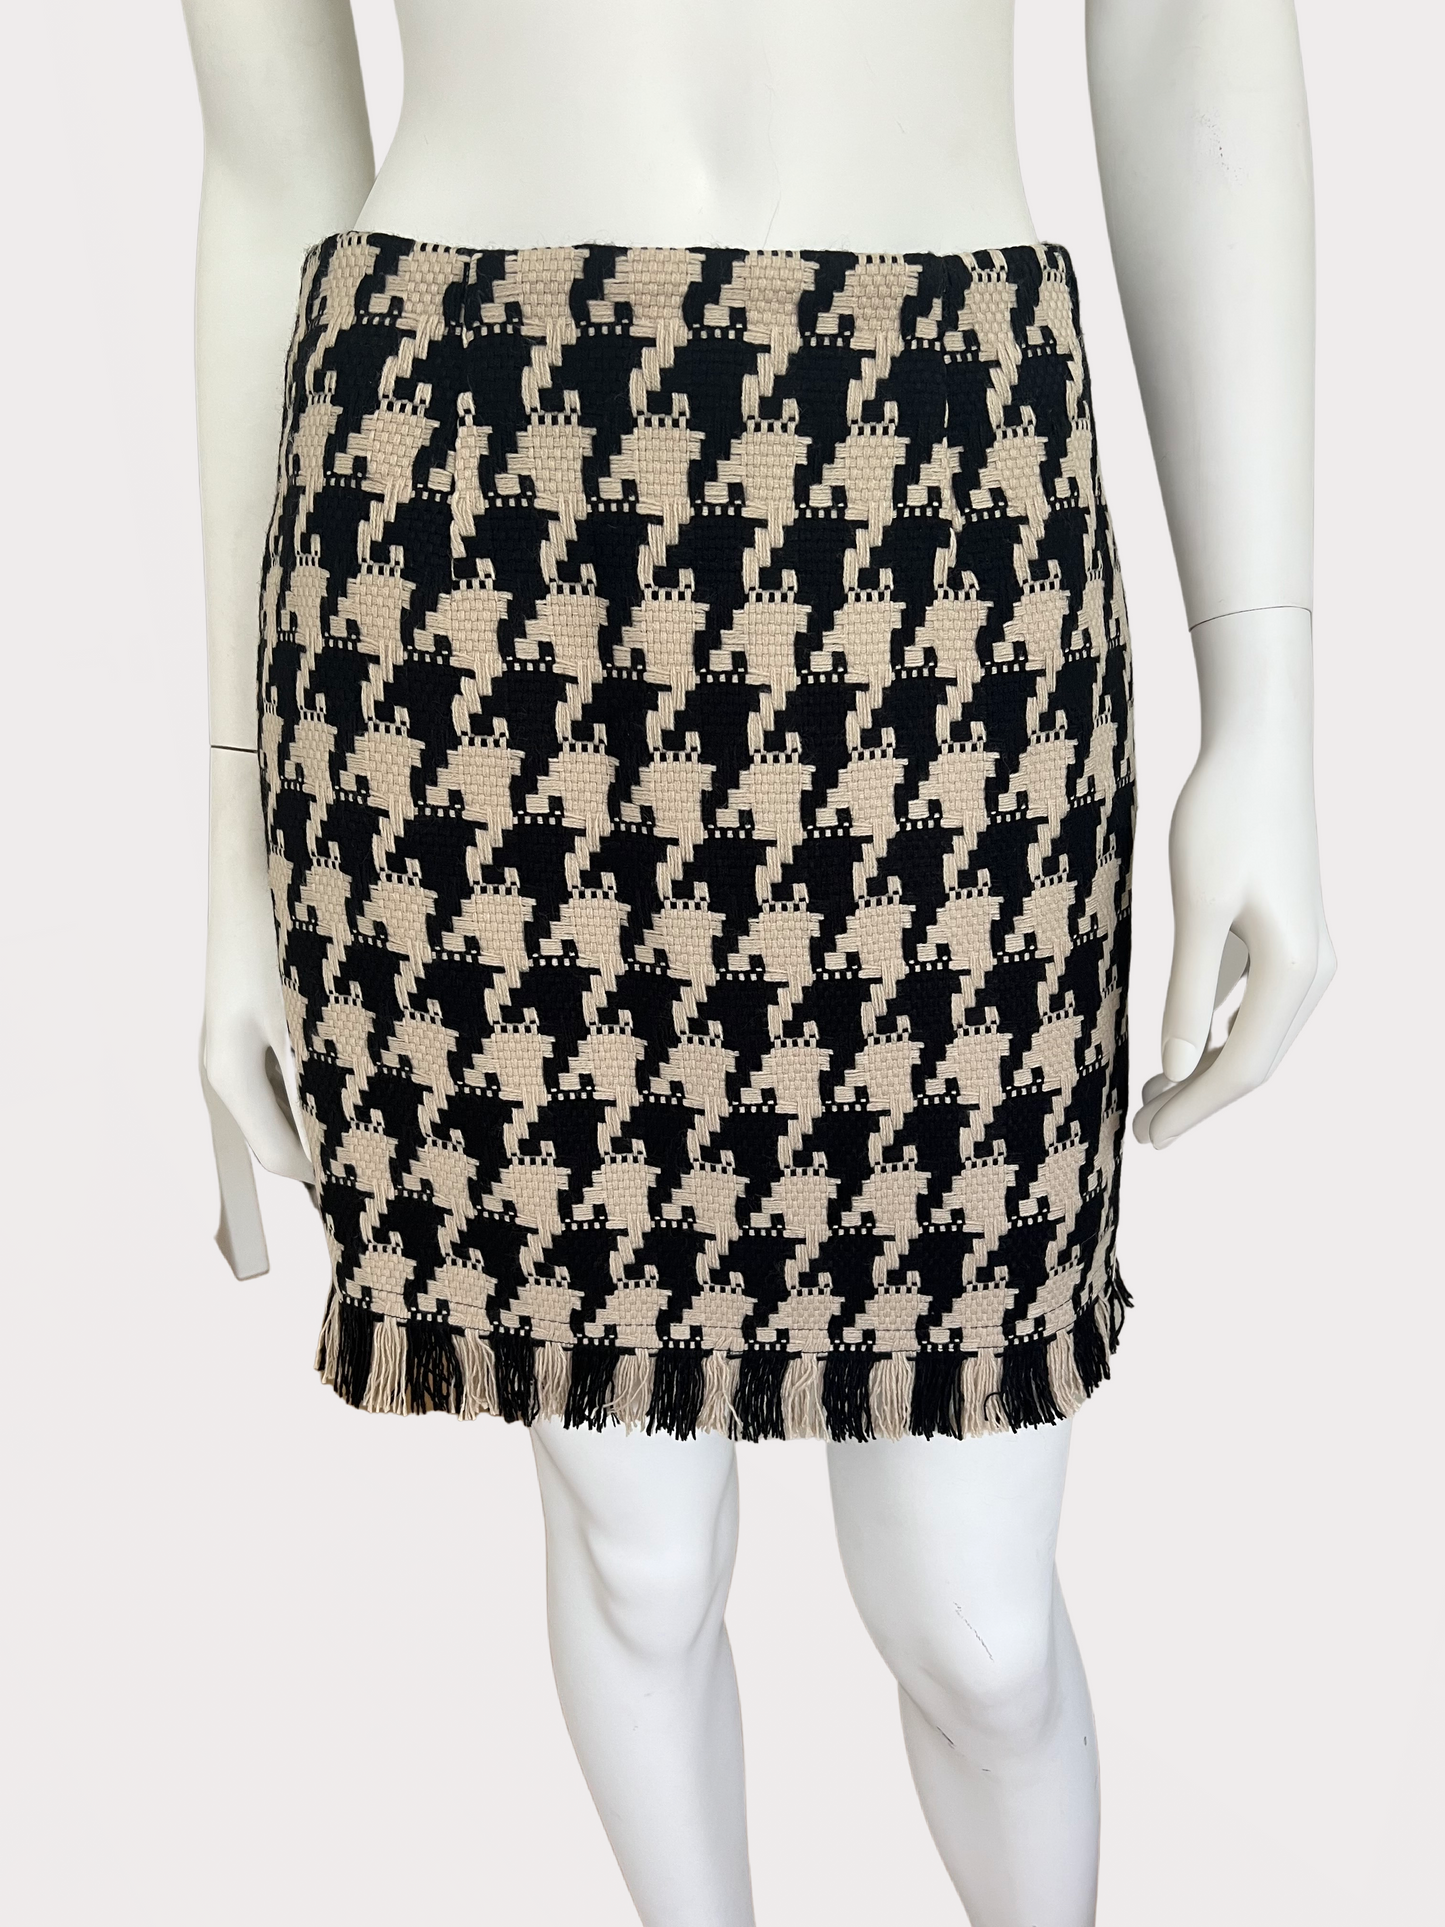 L'Agence - Herringbone Tweed Skirt - New w/ Tags